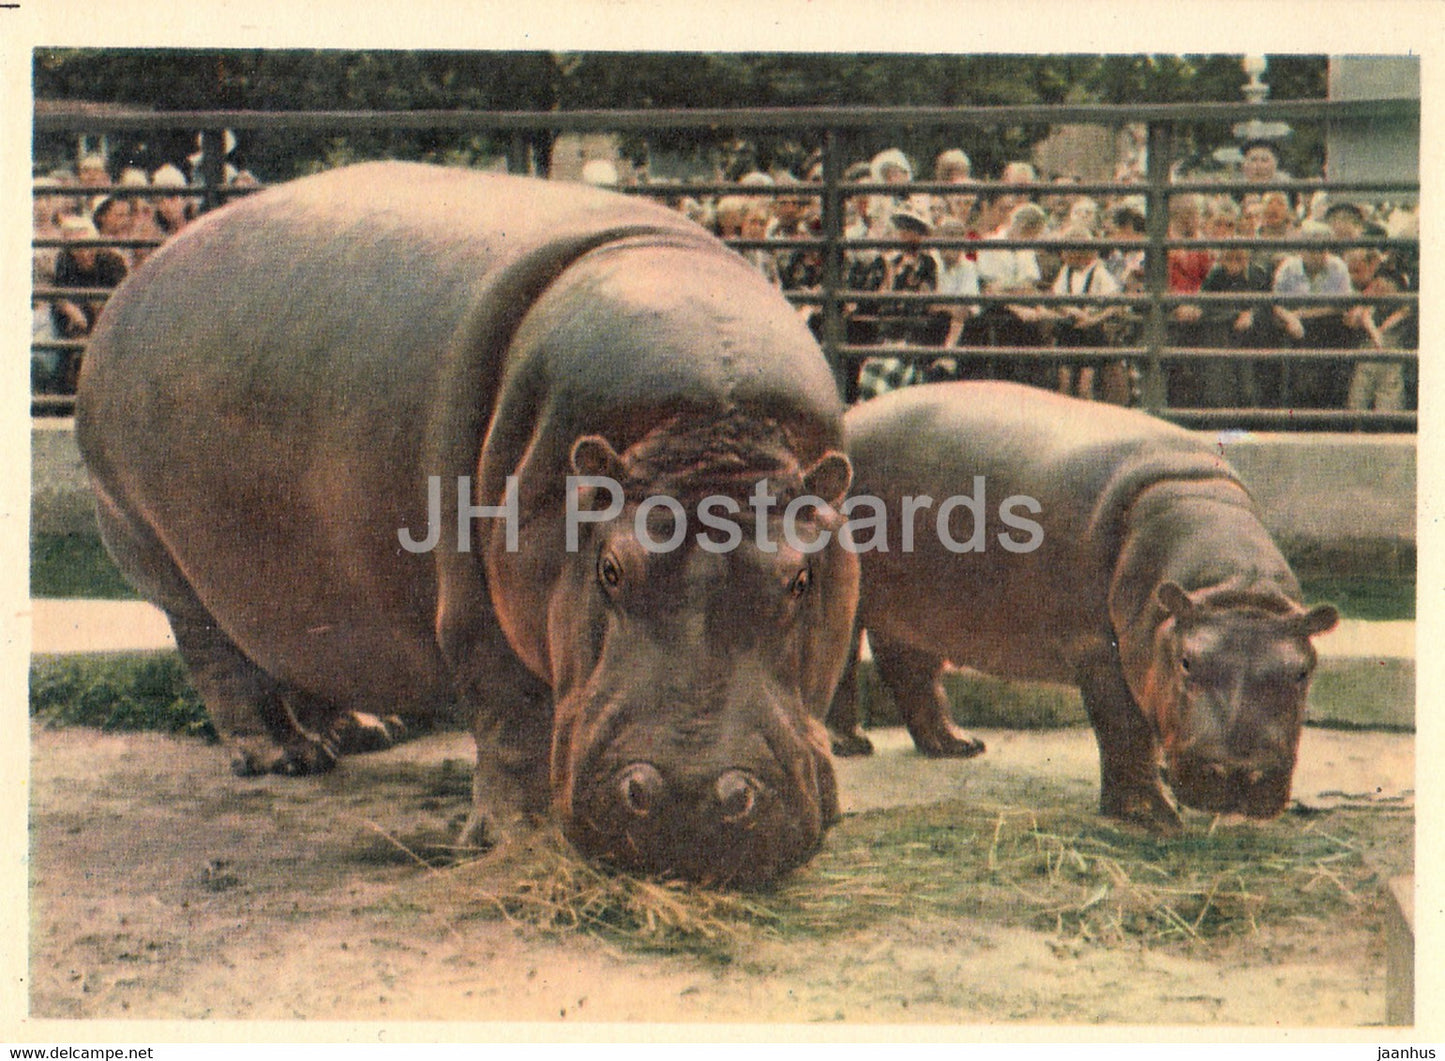 Hippopotamus Greta - Moscow Zoo - 1963 - Russia USSR - unused - JH Postcards